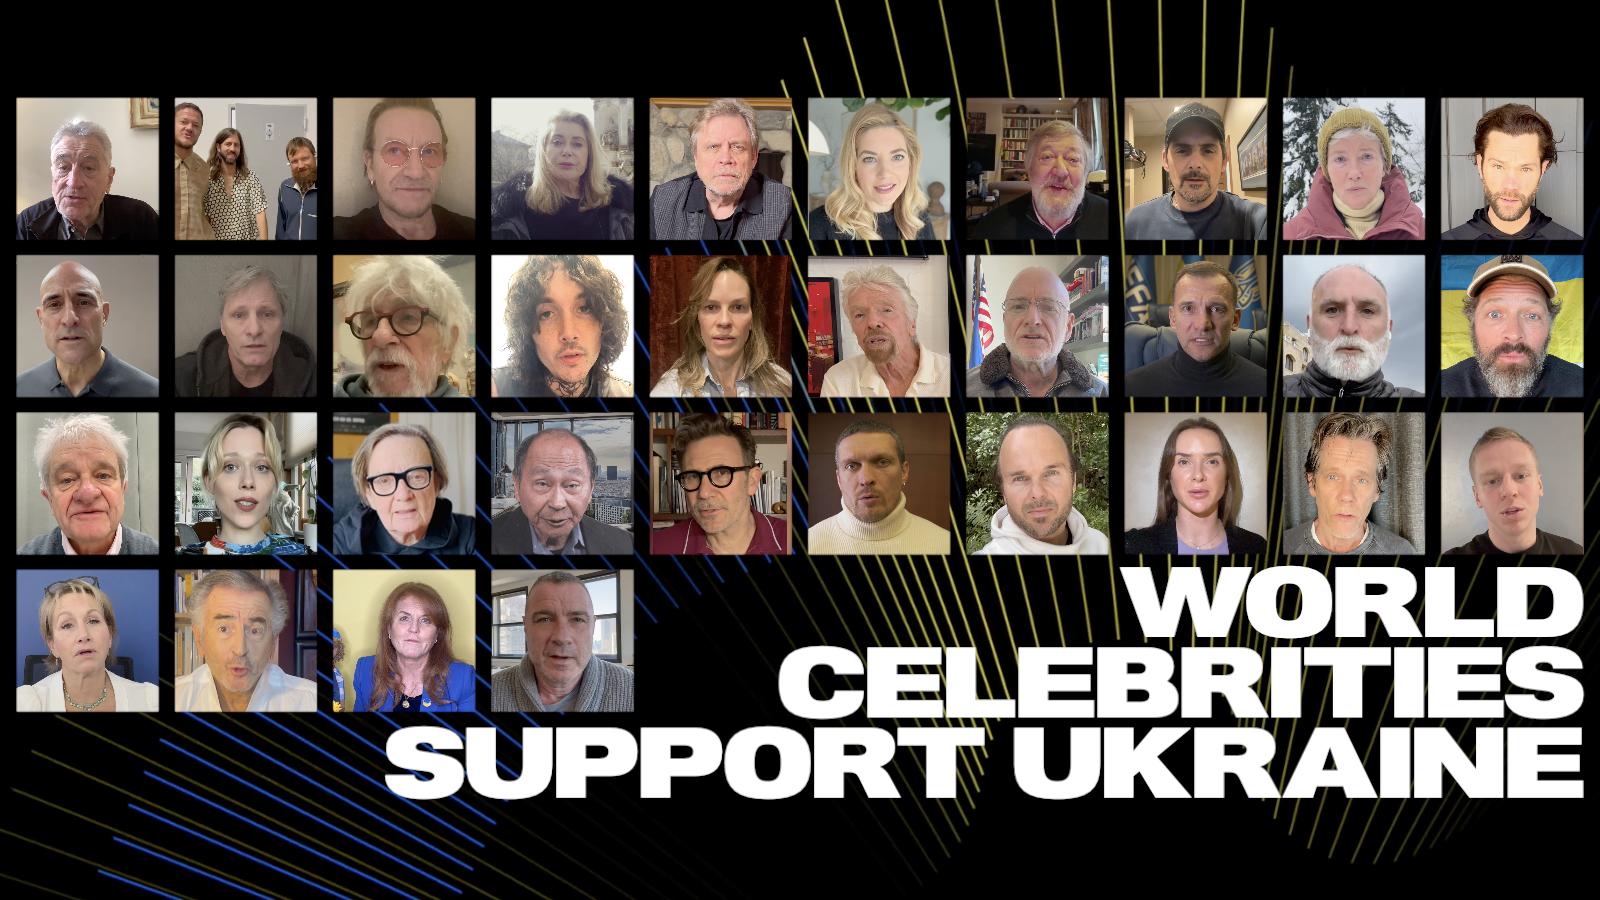 World celebrities support Ukraine